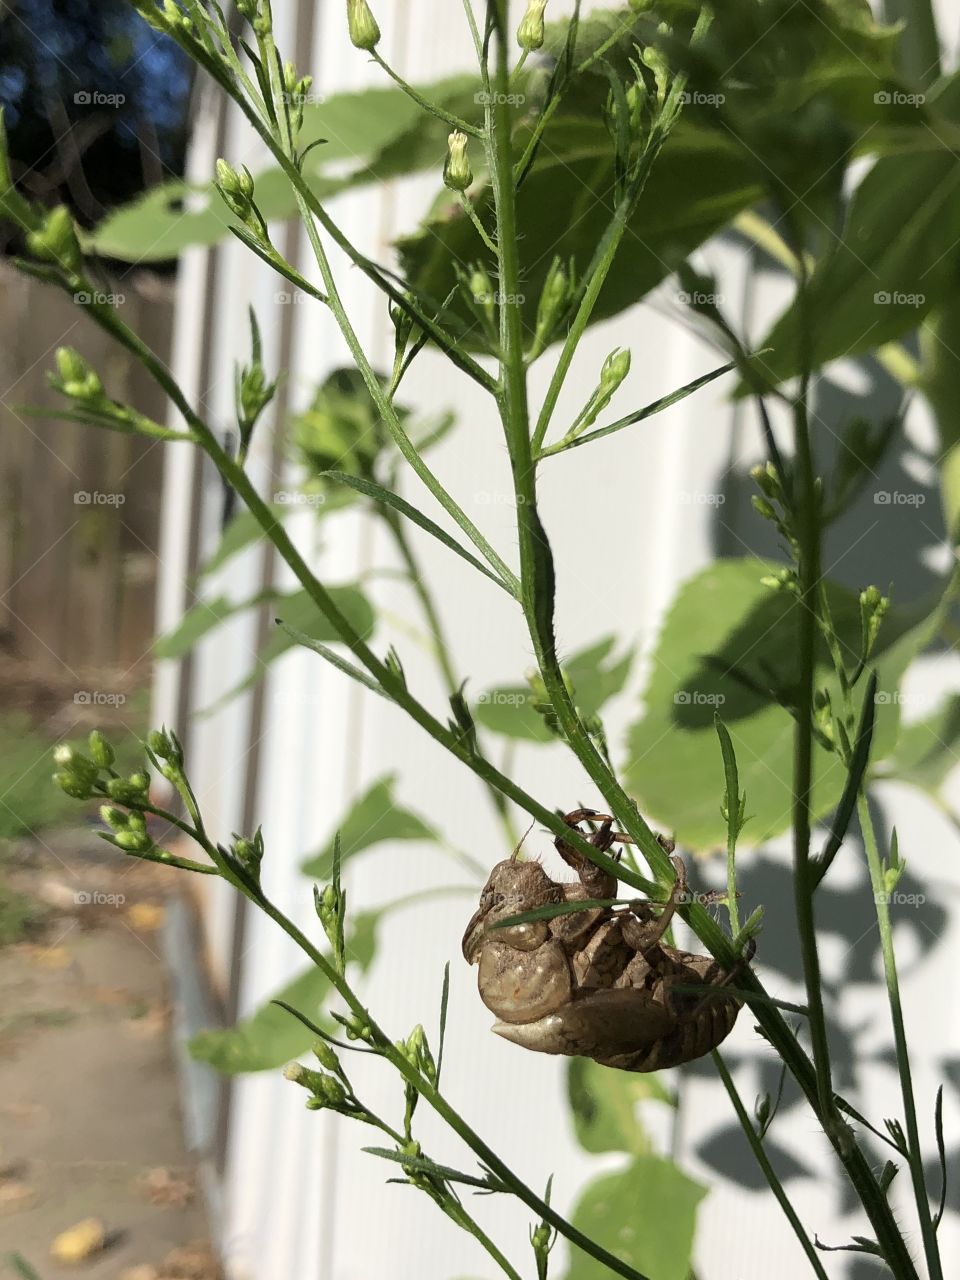 Cicada shell on plant